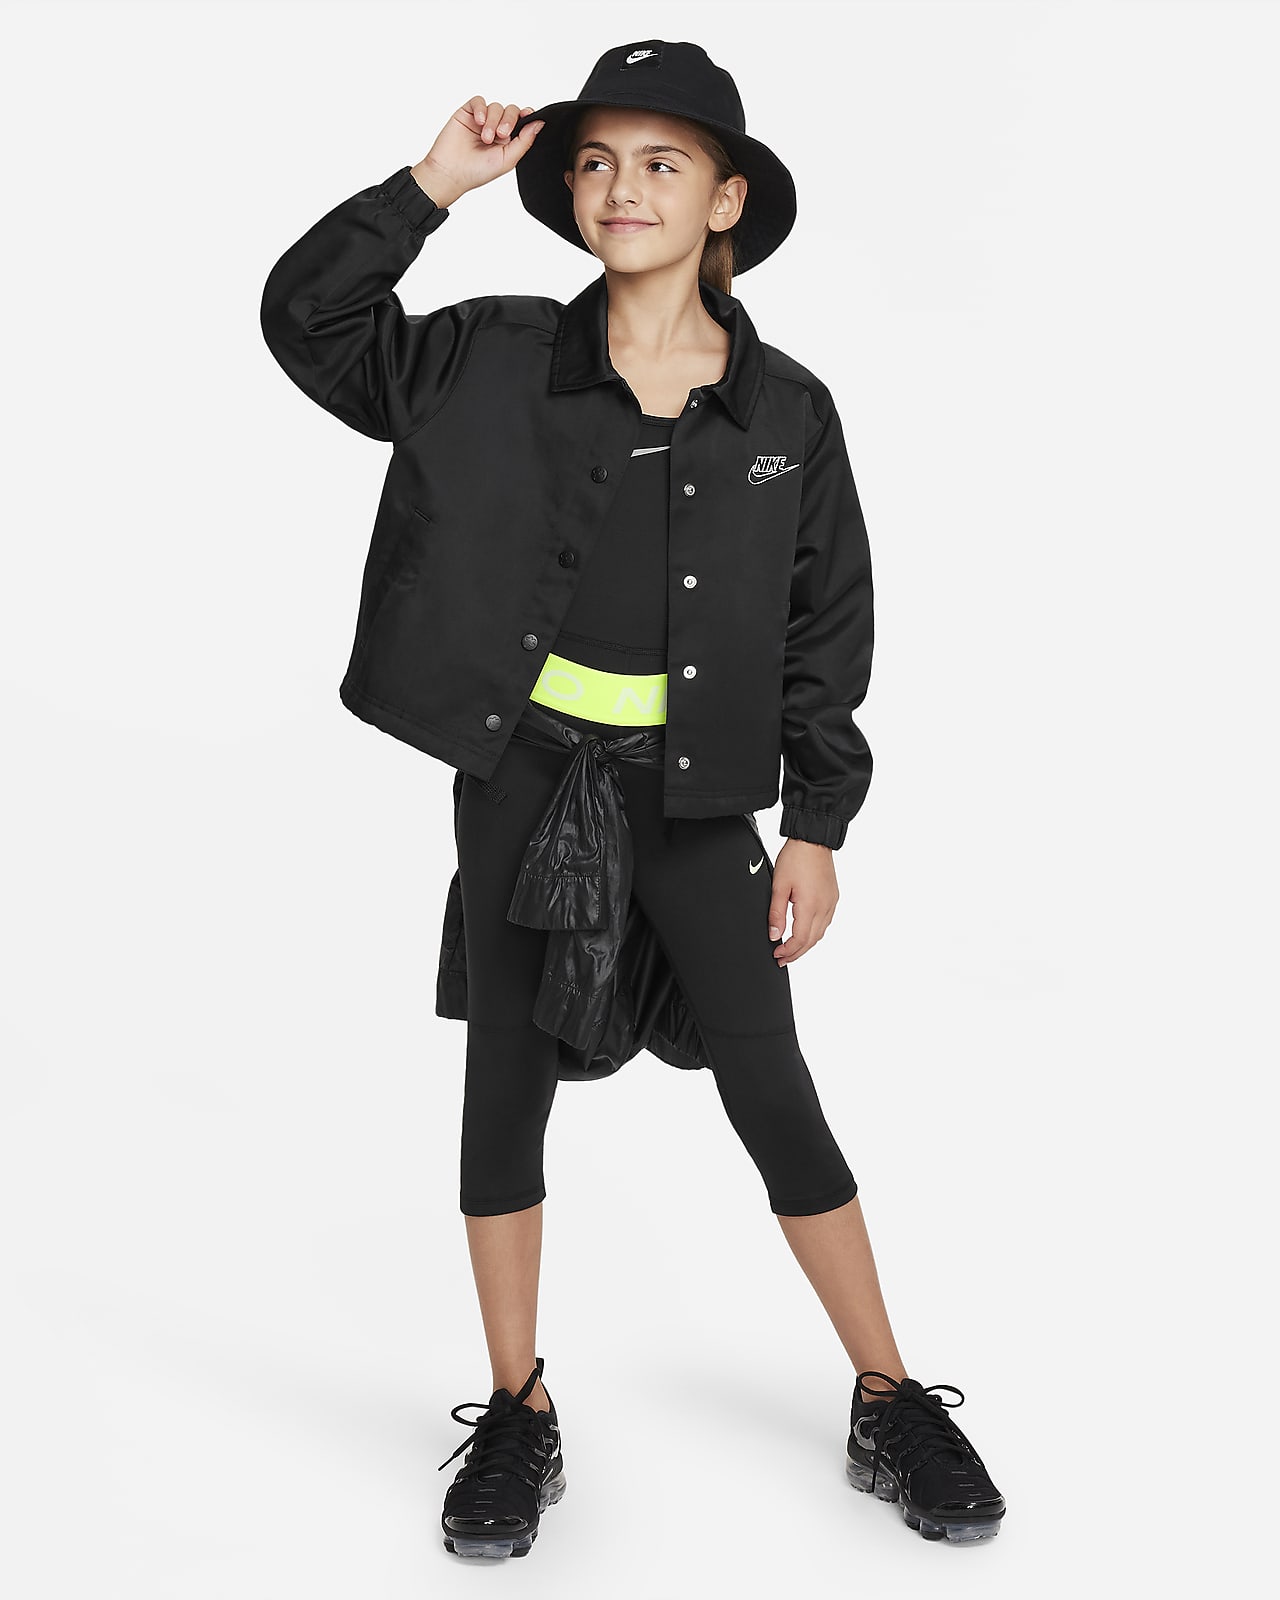 Kids Black Pro Leggings by Nike on Sale